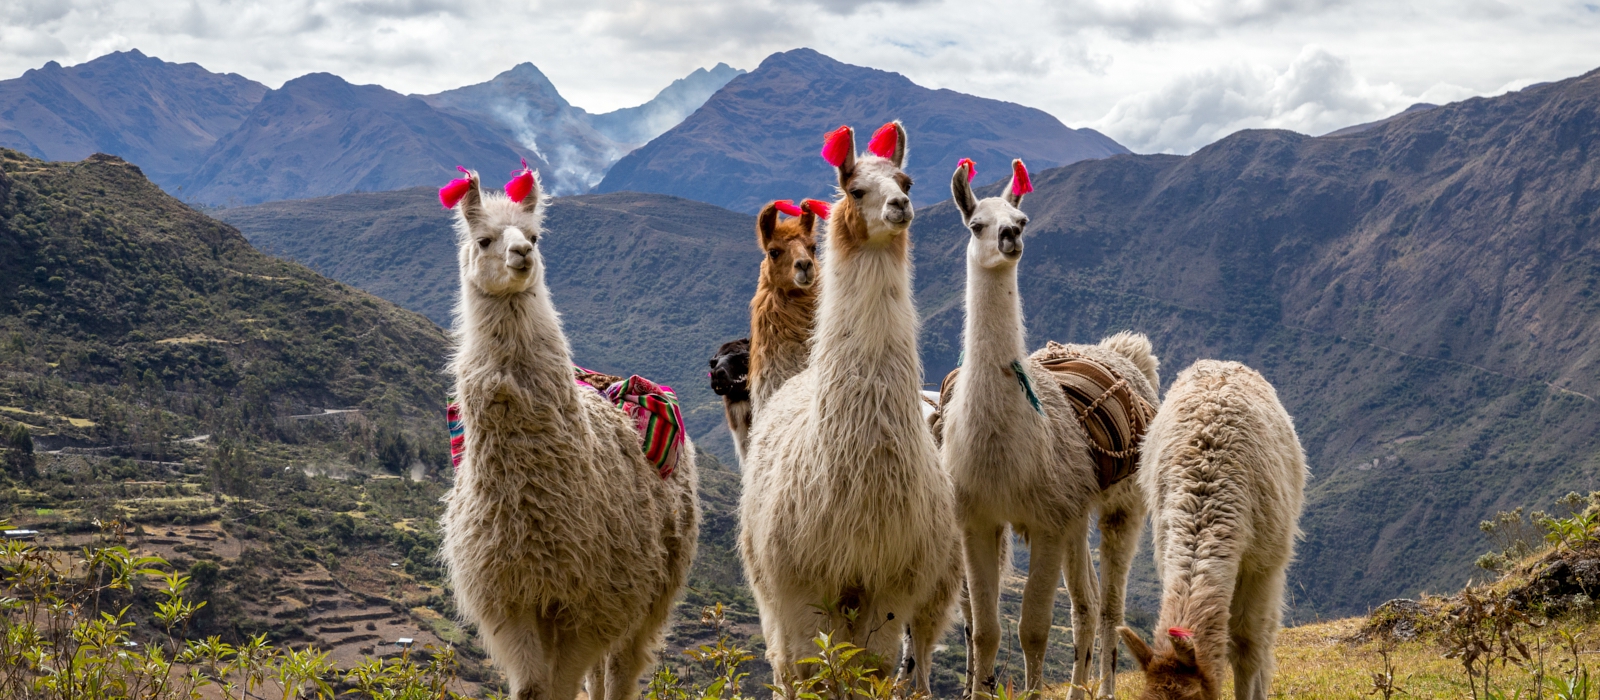 7 Day – Lares Trek & Machu Picchu